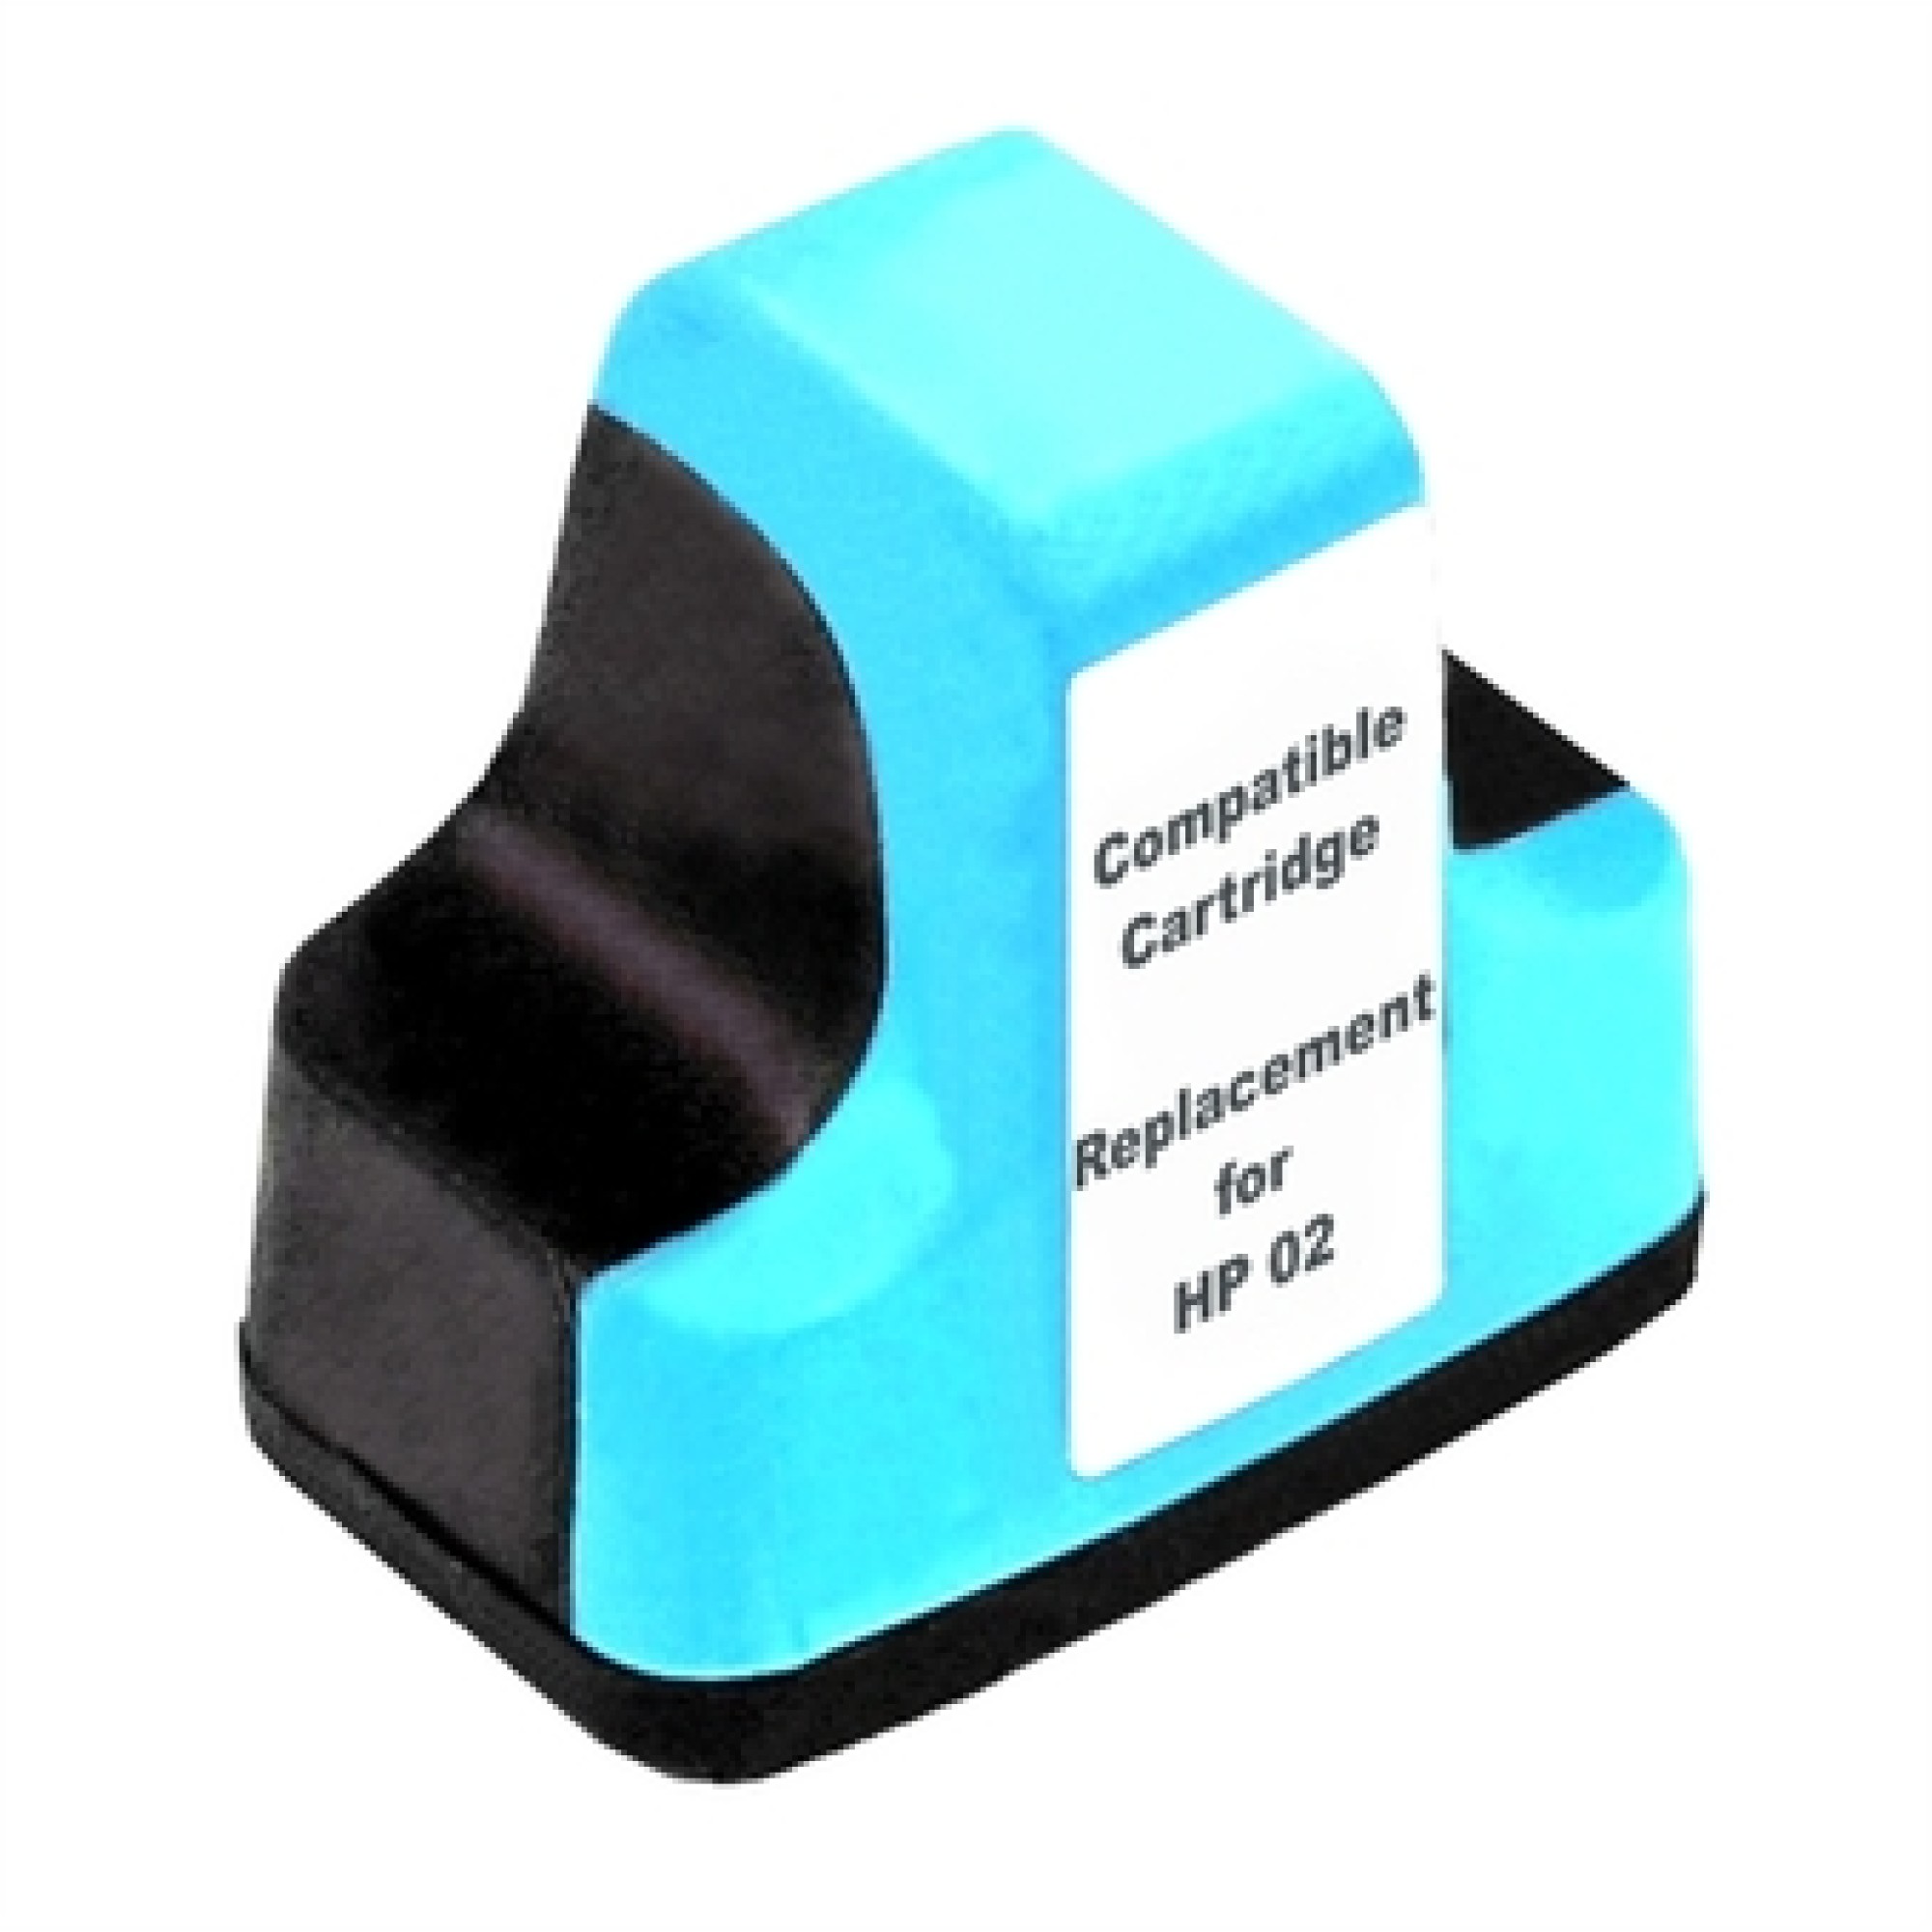 HP 02 / HP02 / HP02xl Compatible Light Cyan Ink Cartridge